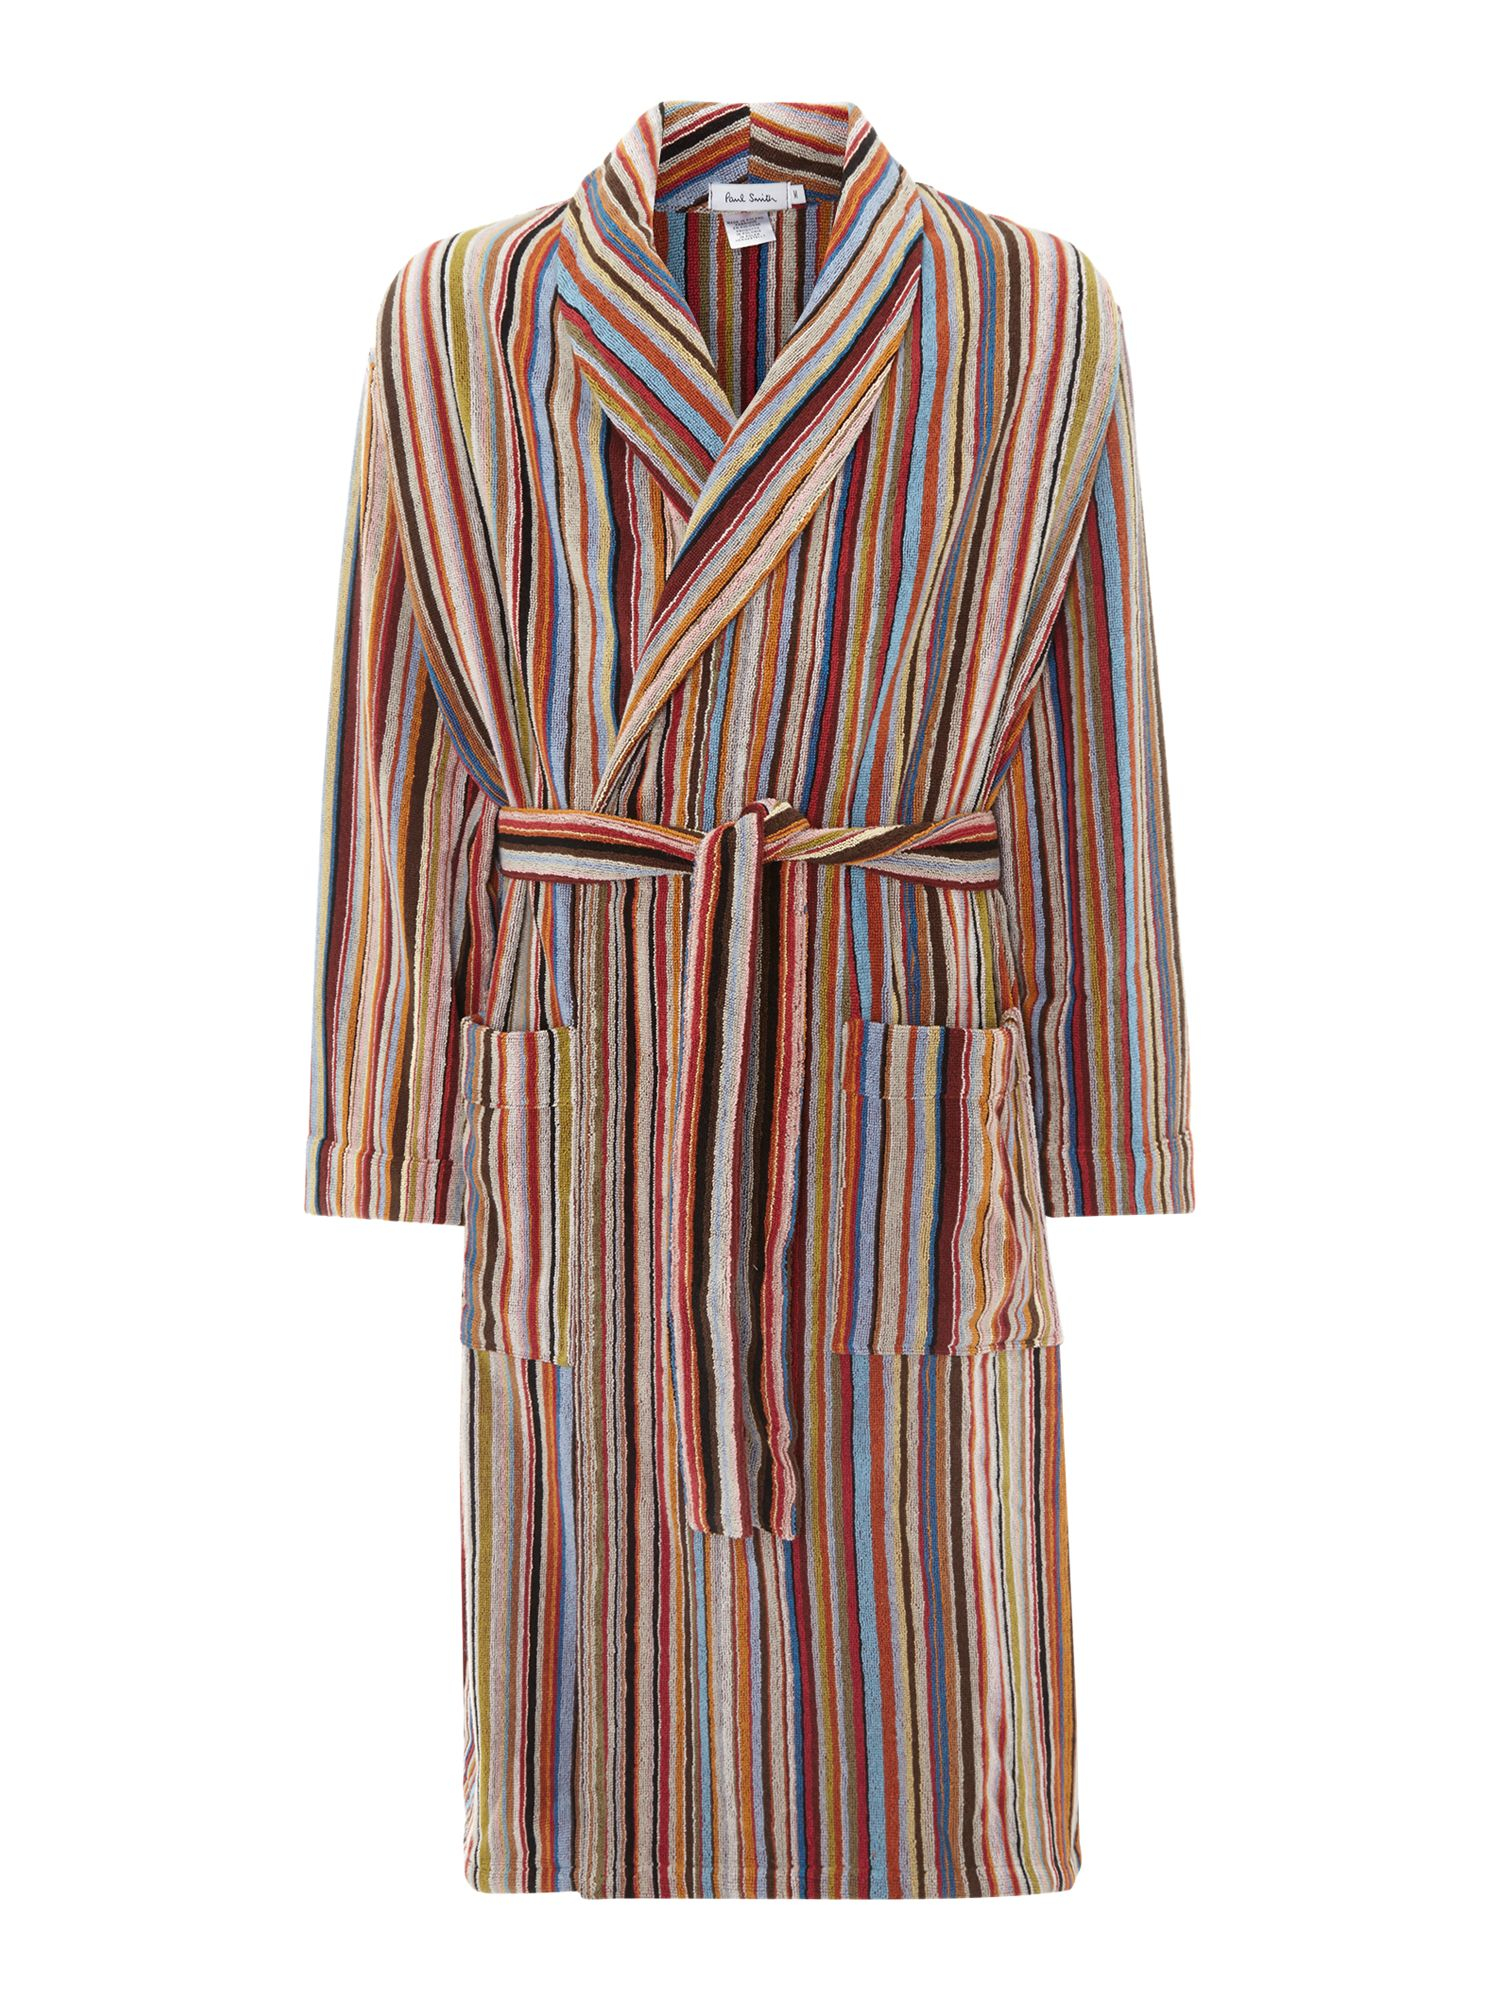 Paul smith Multi-Striped Terry-Cloth Robe in Multicolor for Men | Lyst